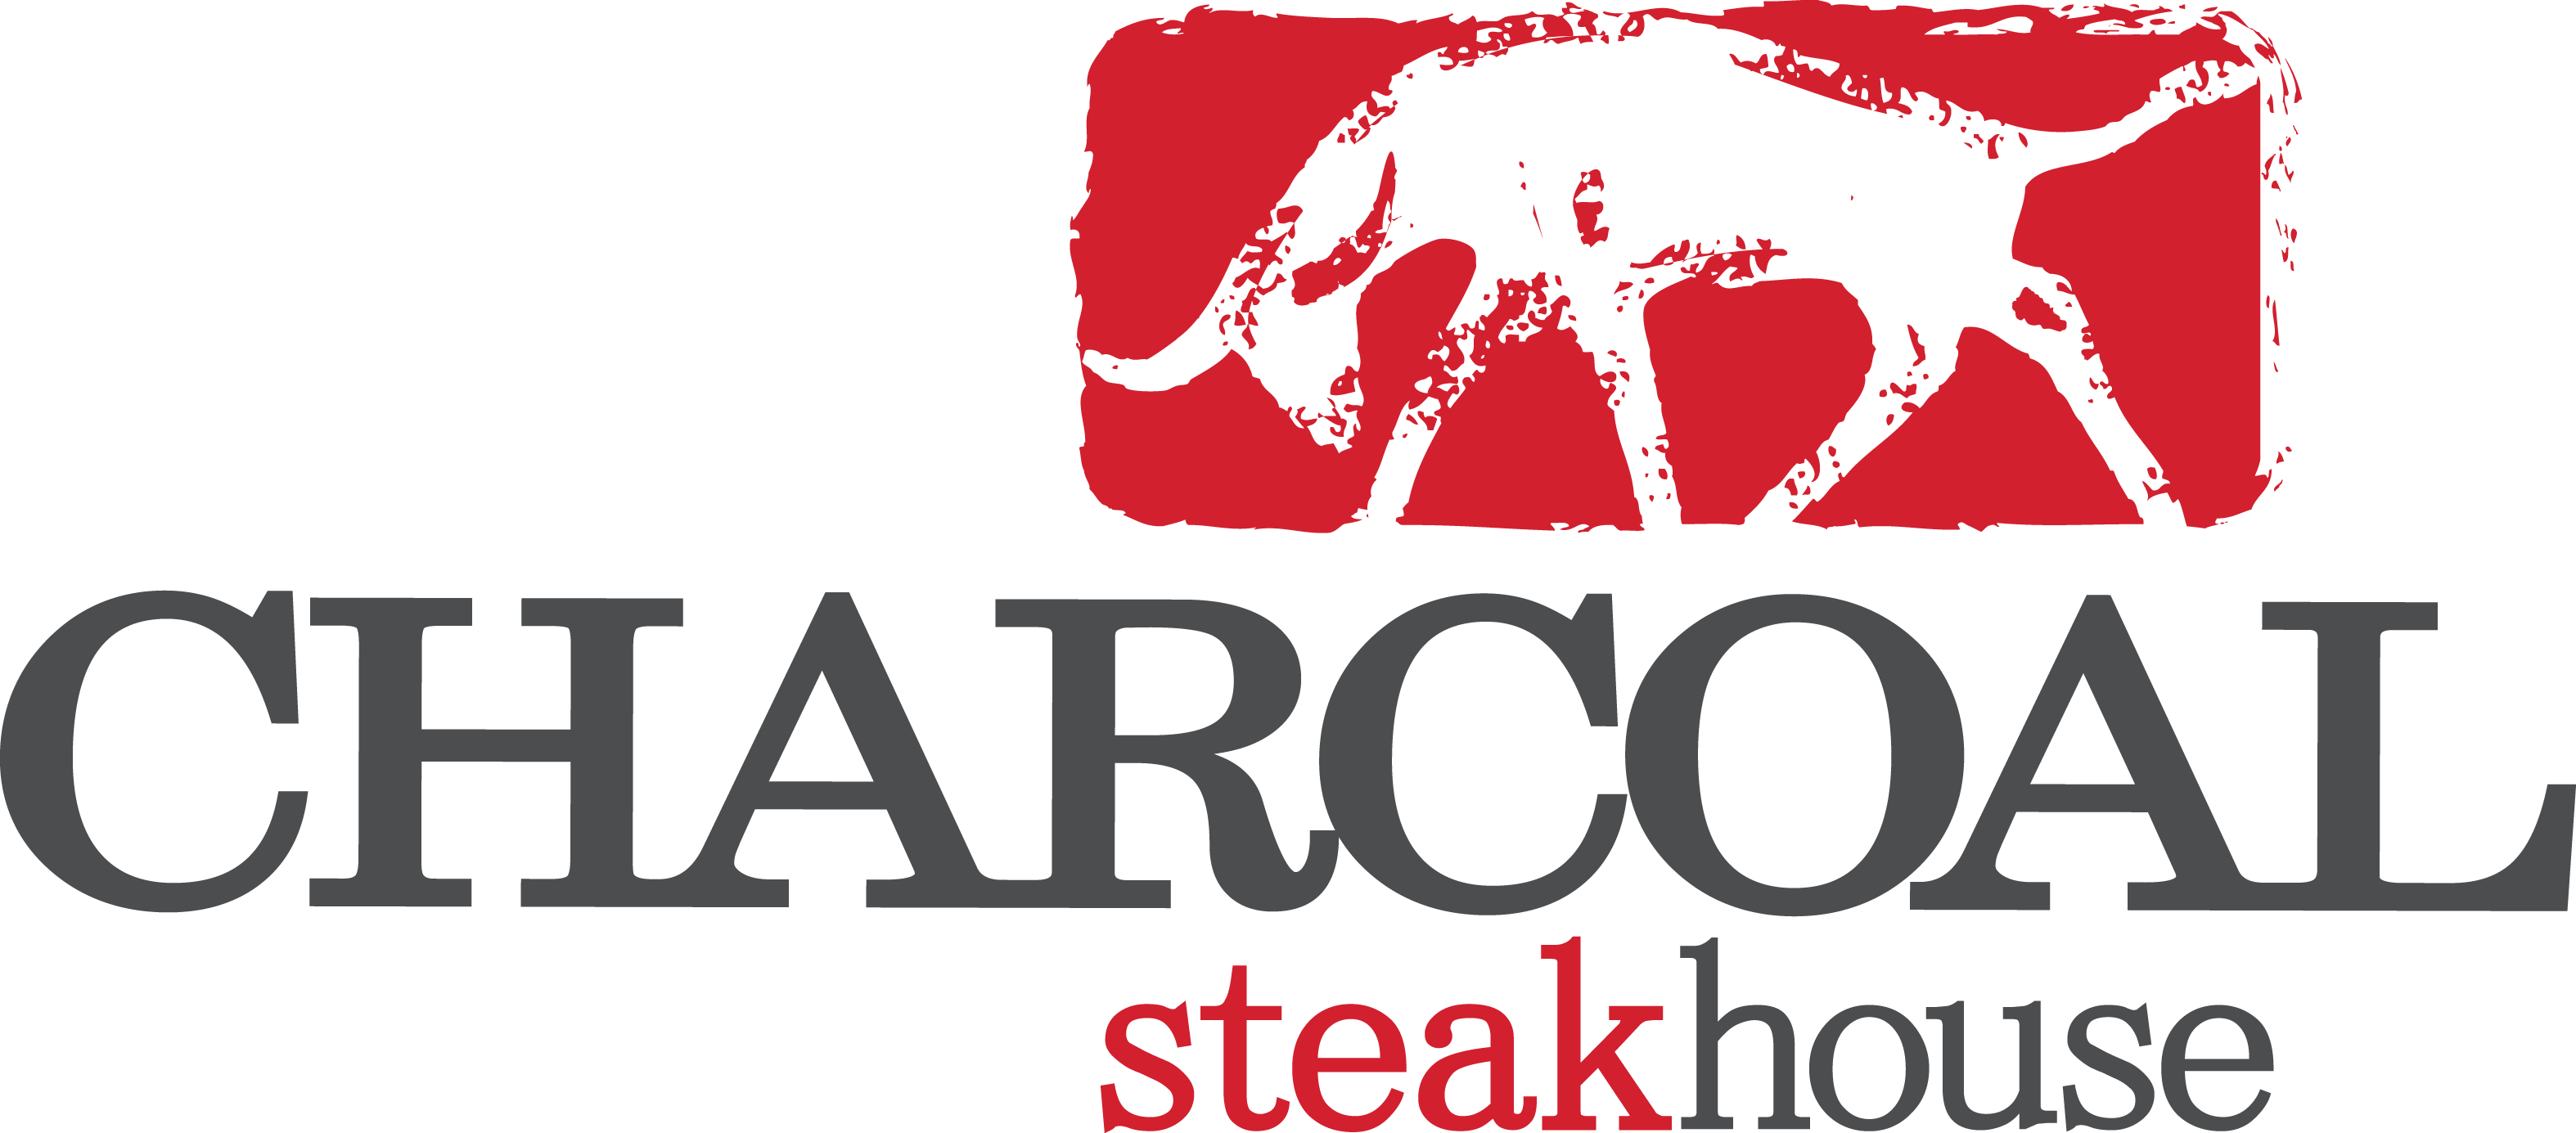 Steakhouse Logo - Charcoal Steak House